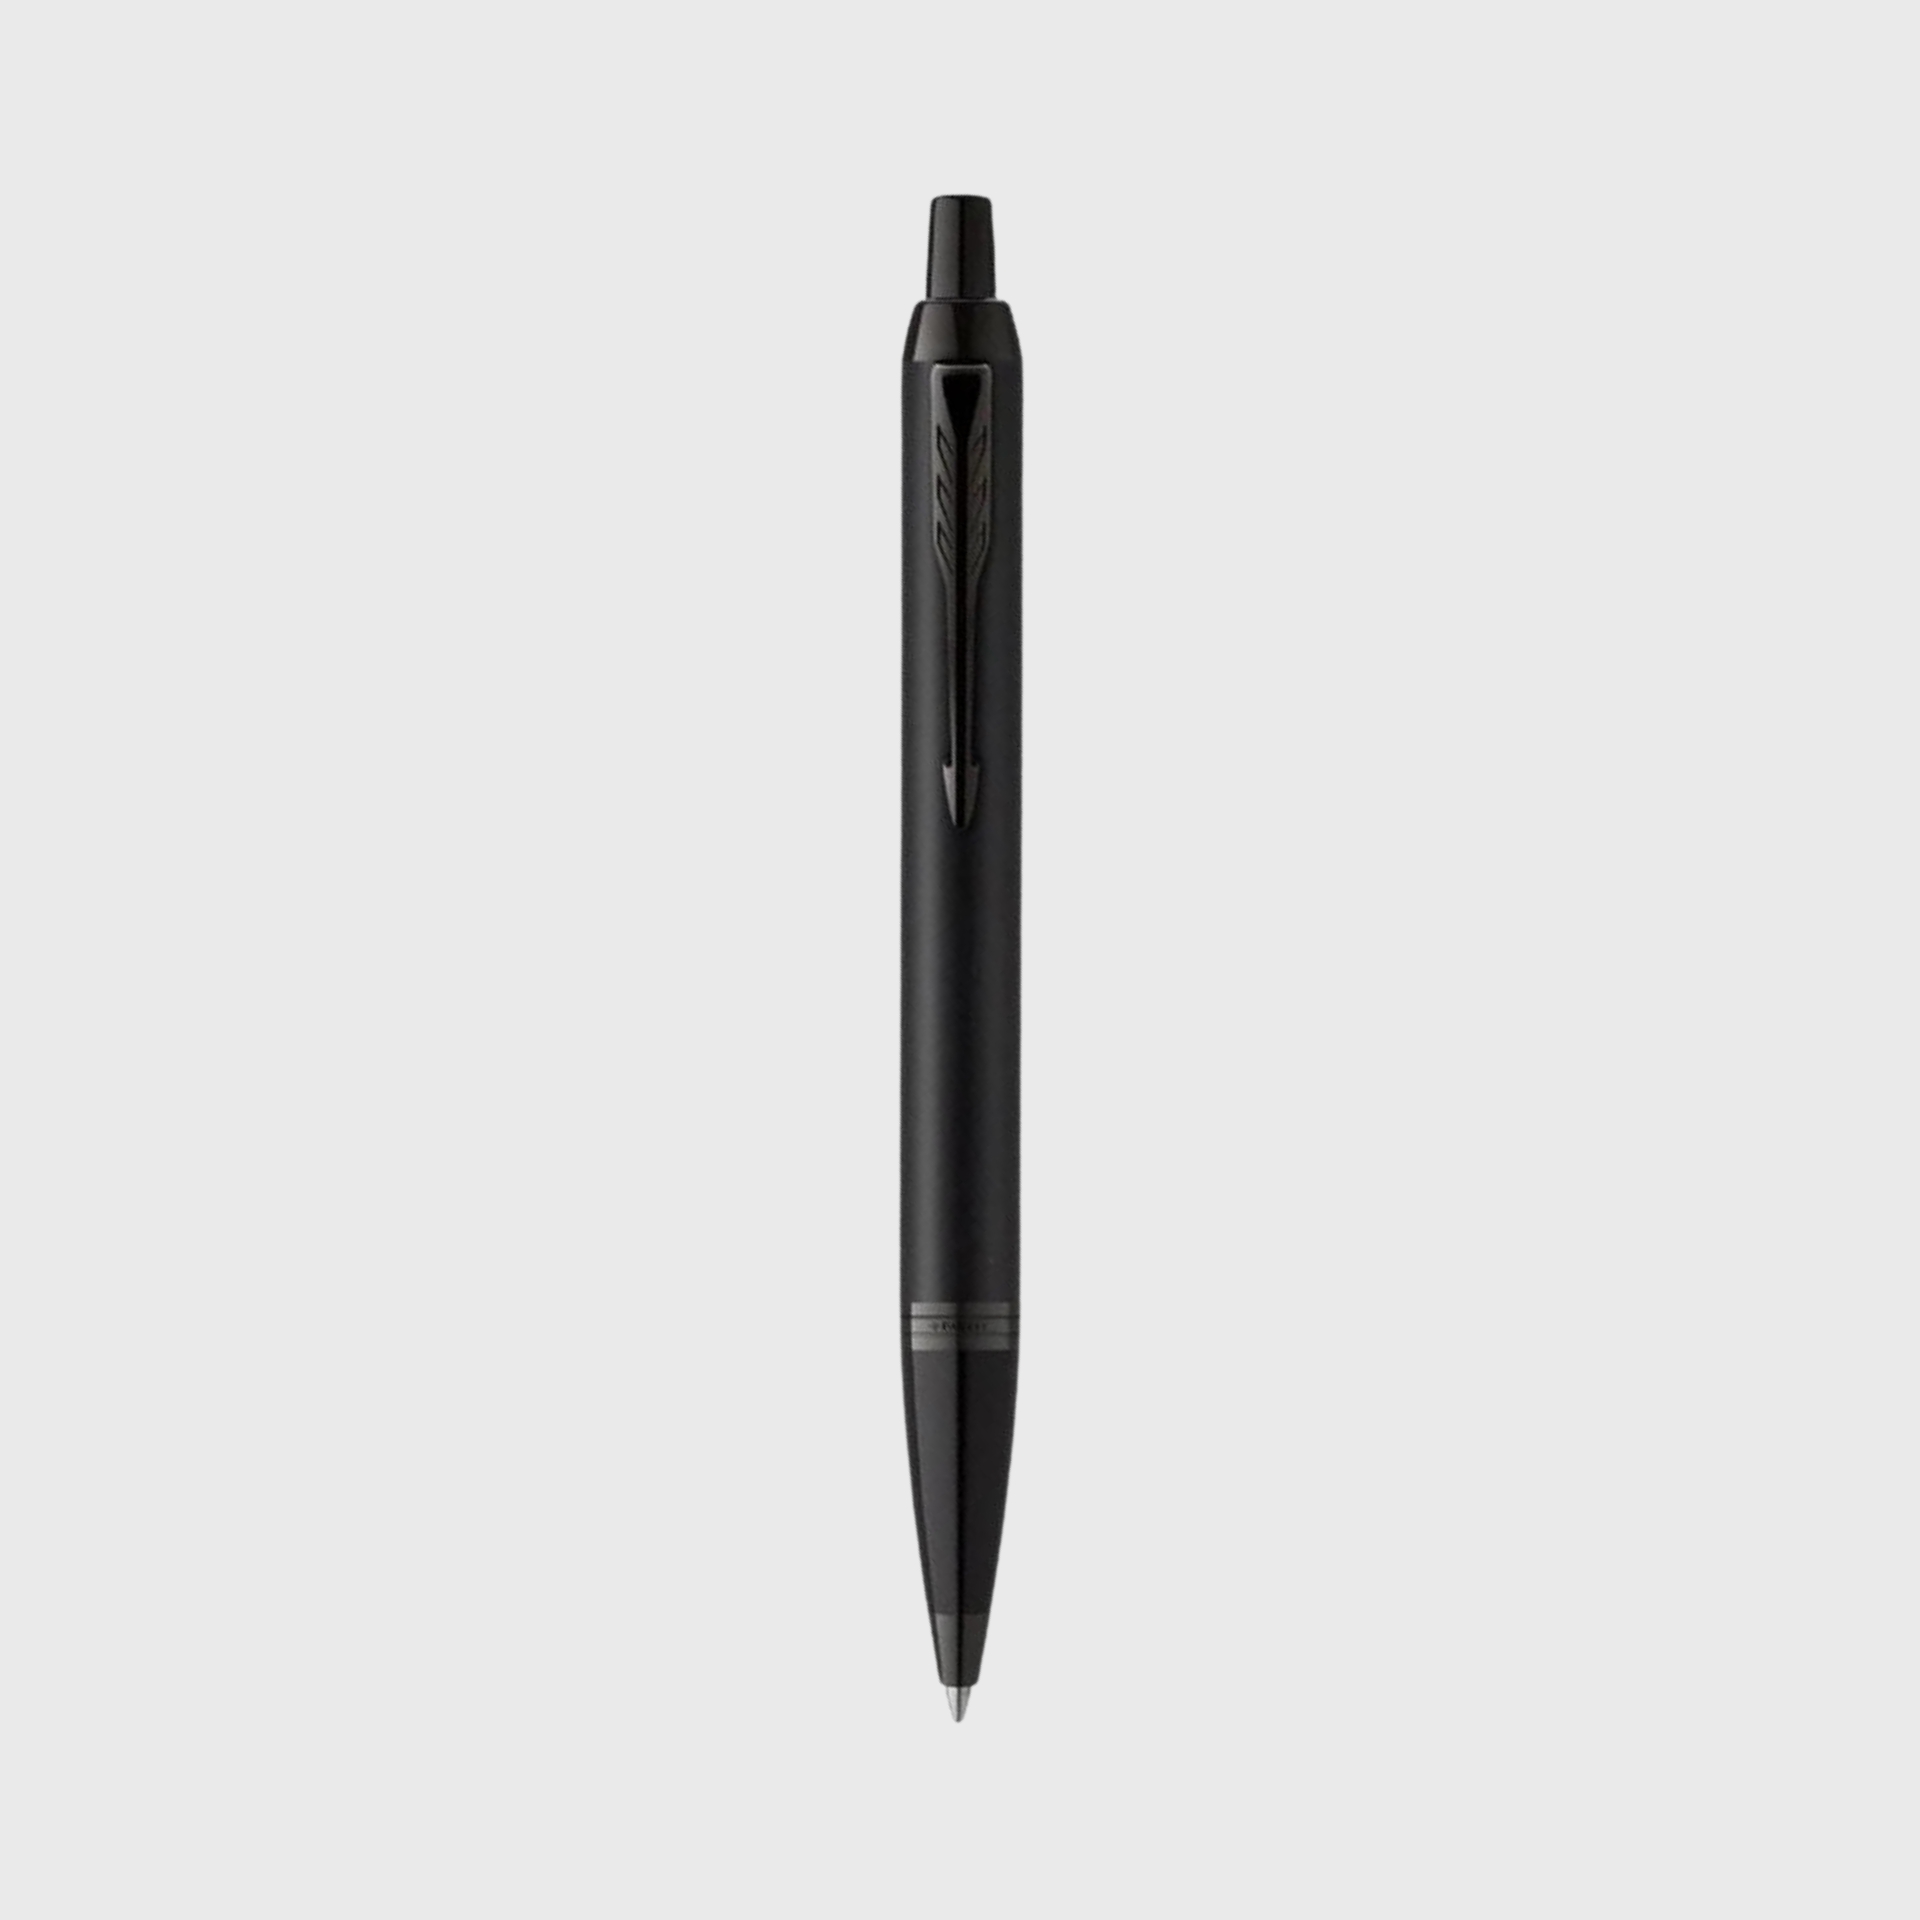 Parker Pen Singapore IM Matte Metallic Black Edition Ballpoint Pen Corporate Gift